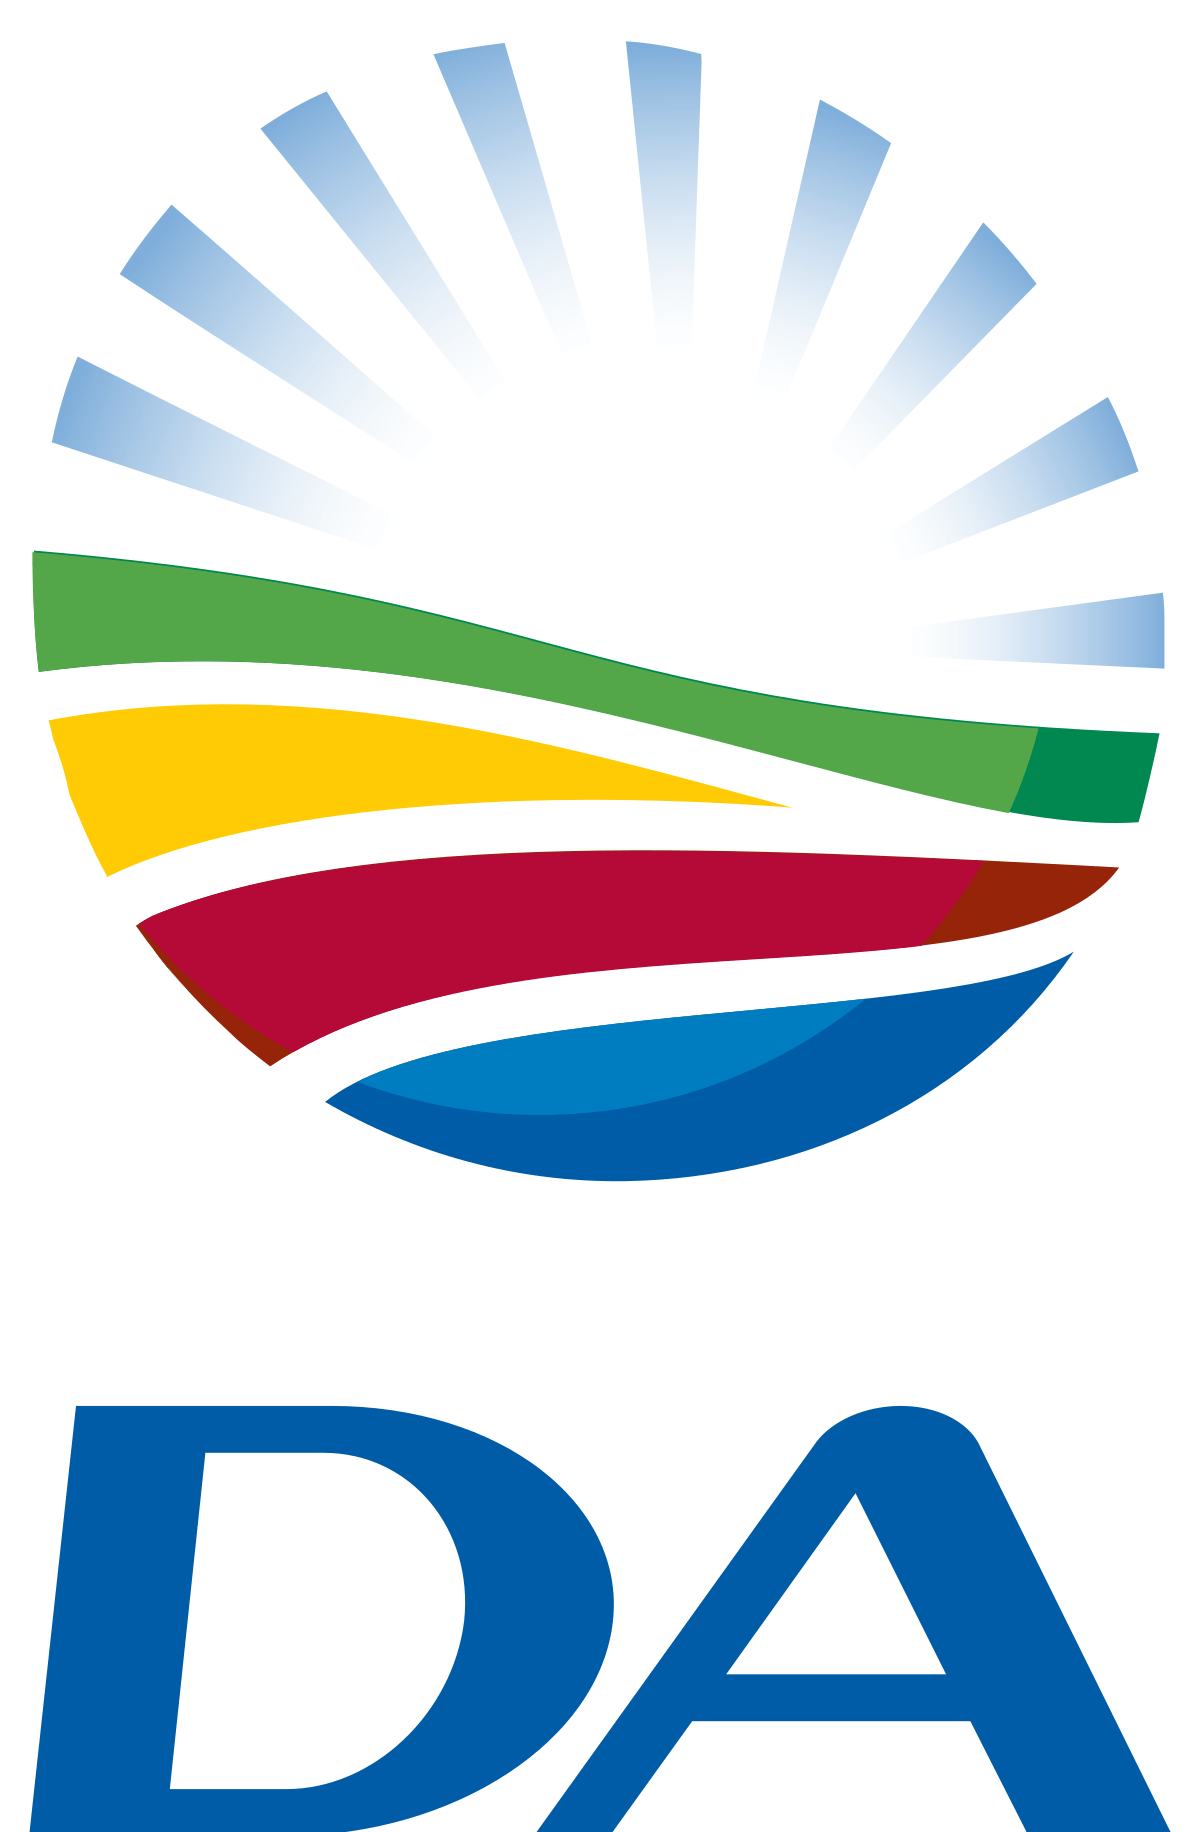 Da Logo - DisruptAfrica DA Logo On Transparent With Tag Small Logo Image ...